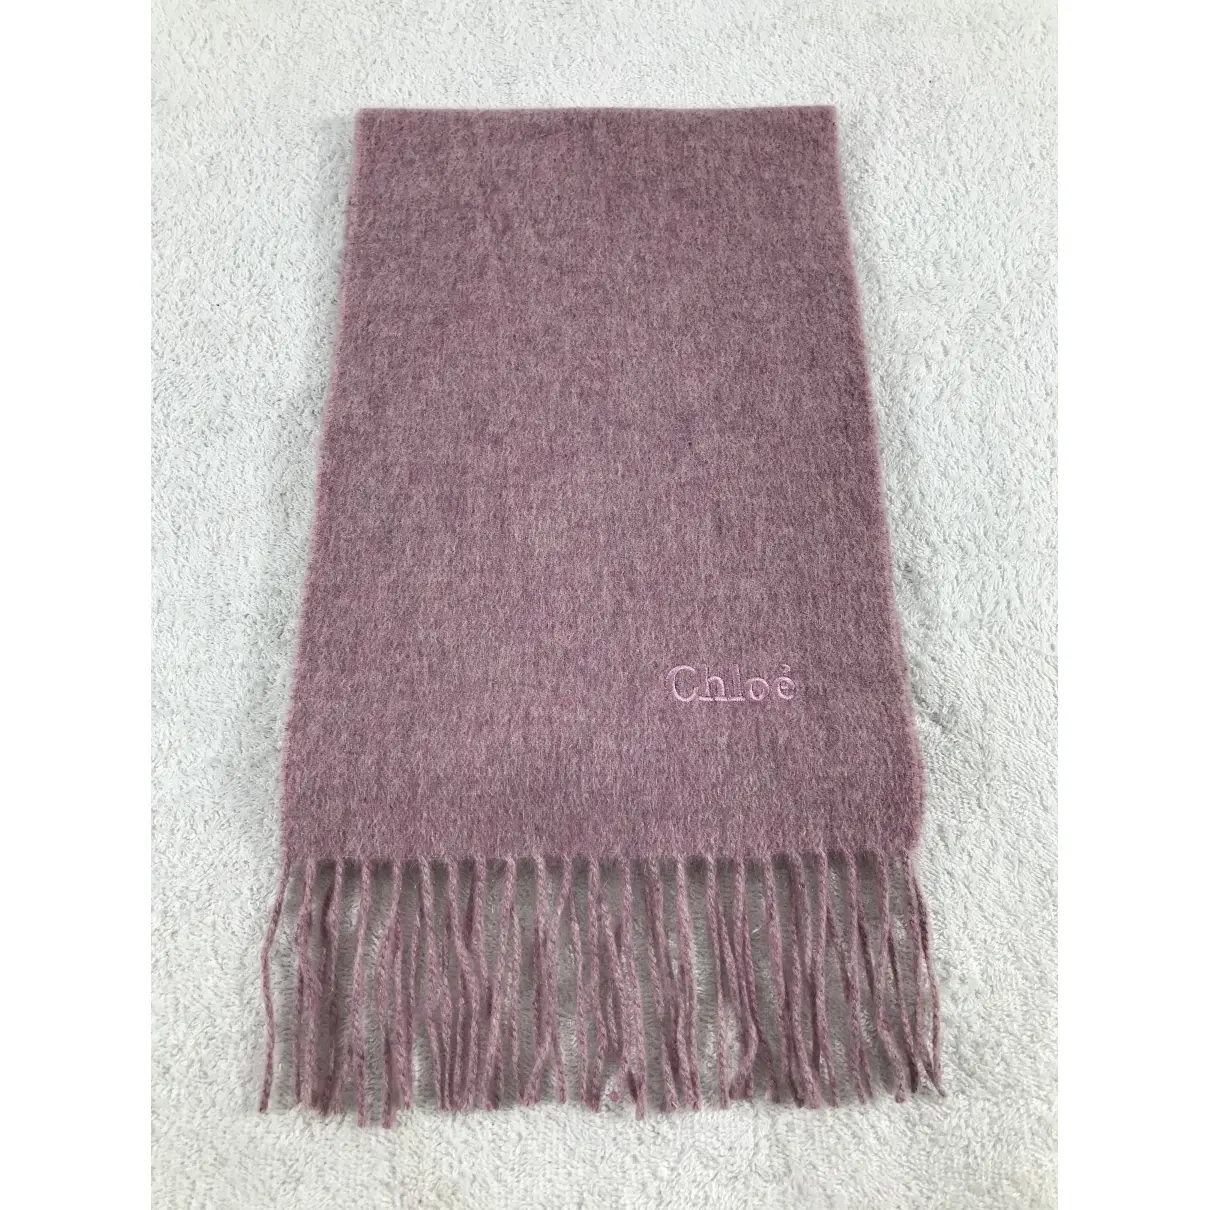 Chloé Cashmere scarf for sale